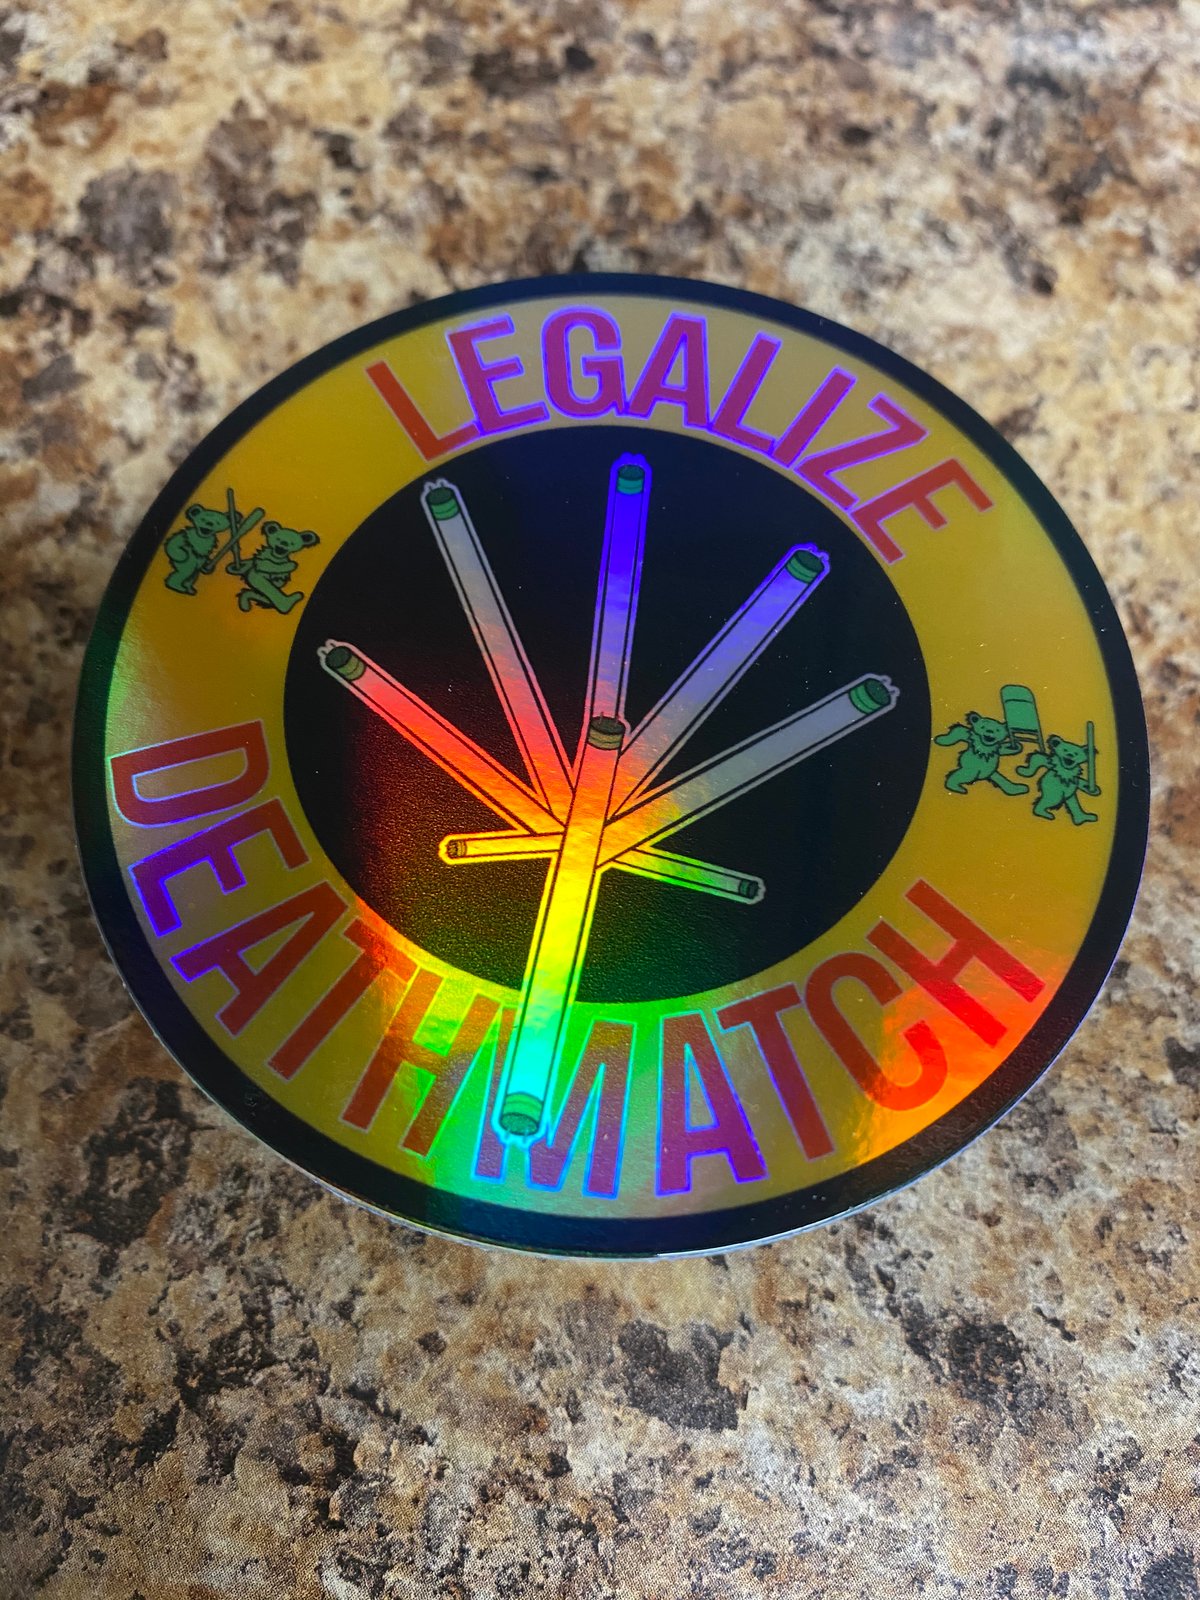 3” holographic Legalize Deathmatch stickers